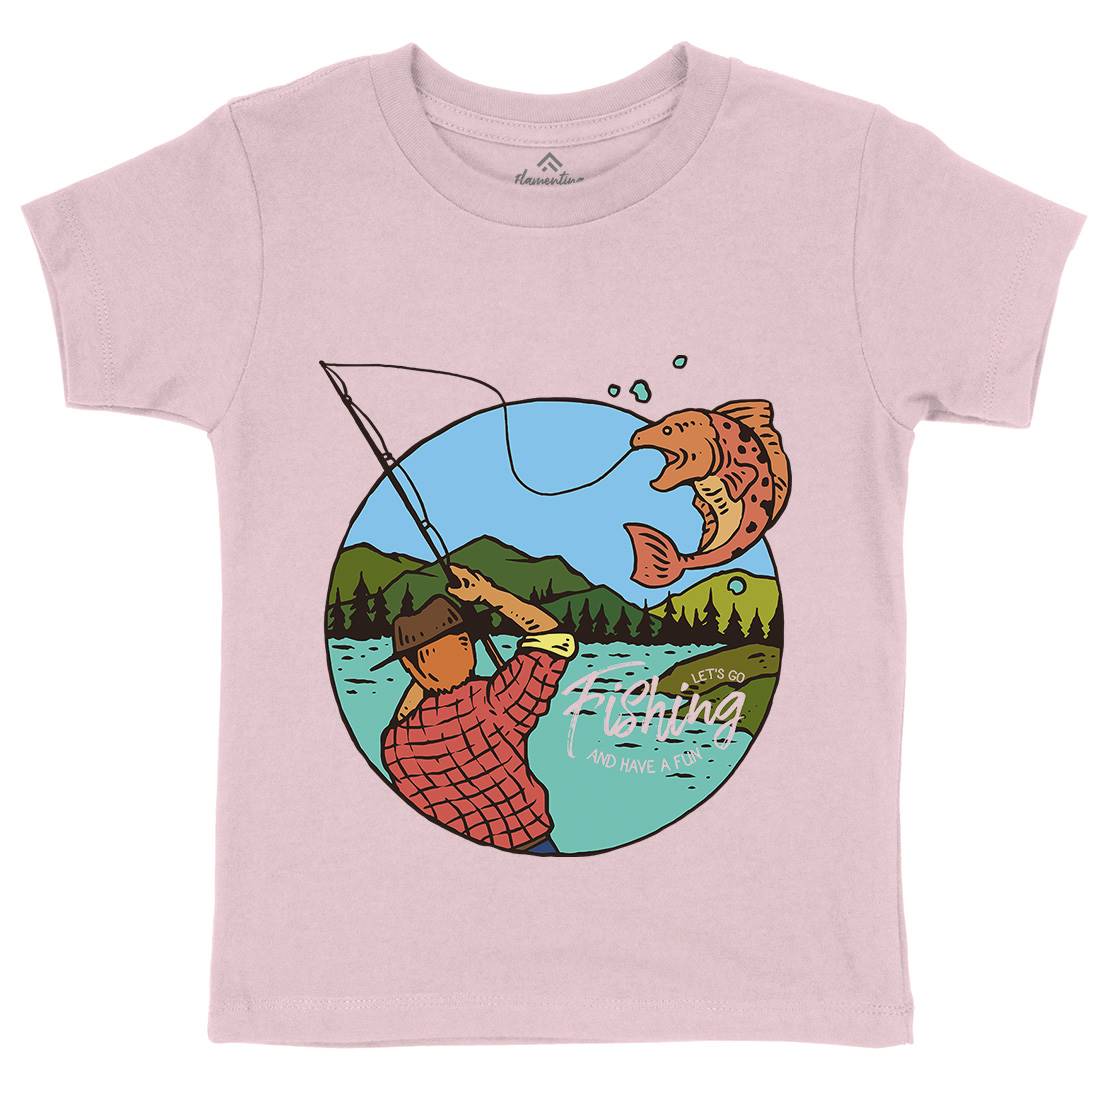 Lets Go Kids Crew Neck T-Shirt Fishing C728